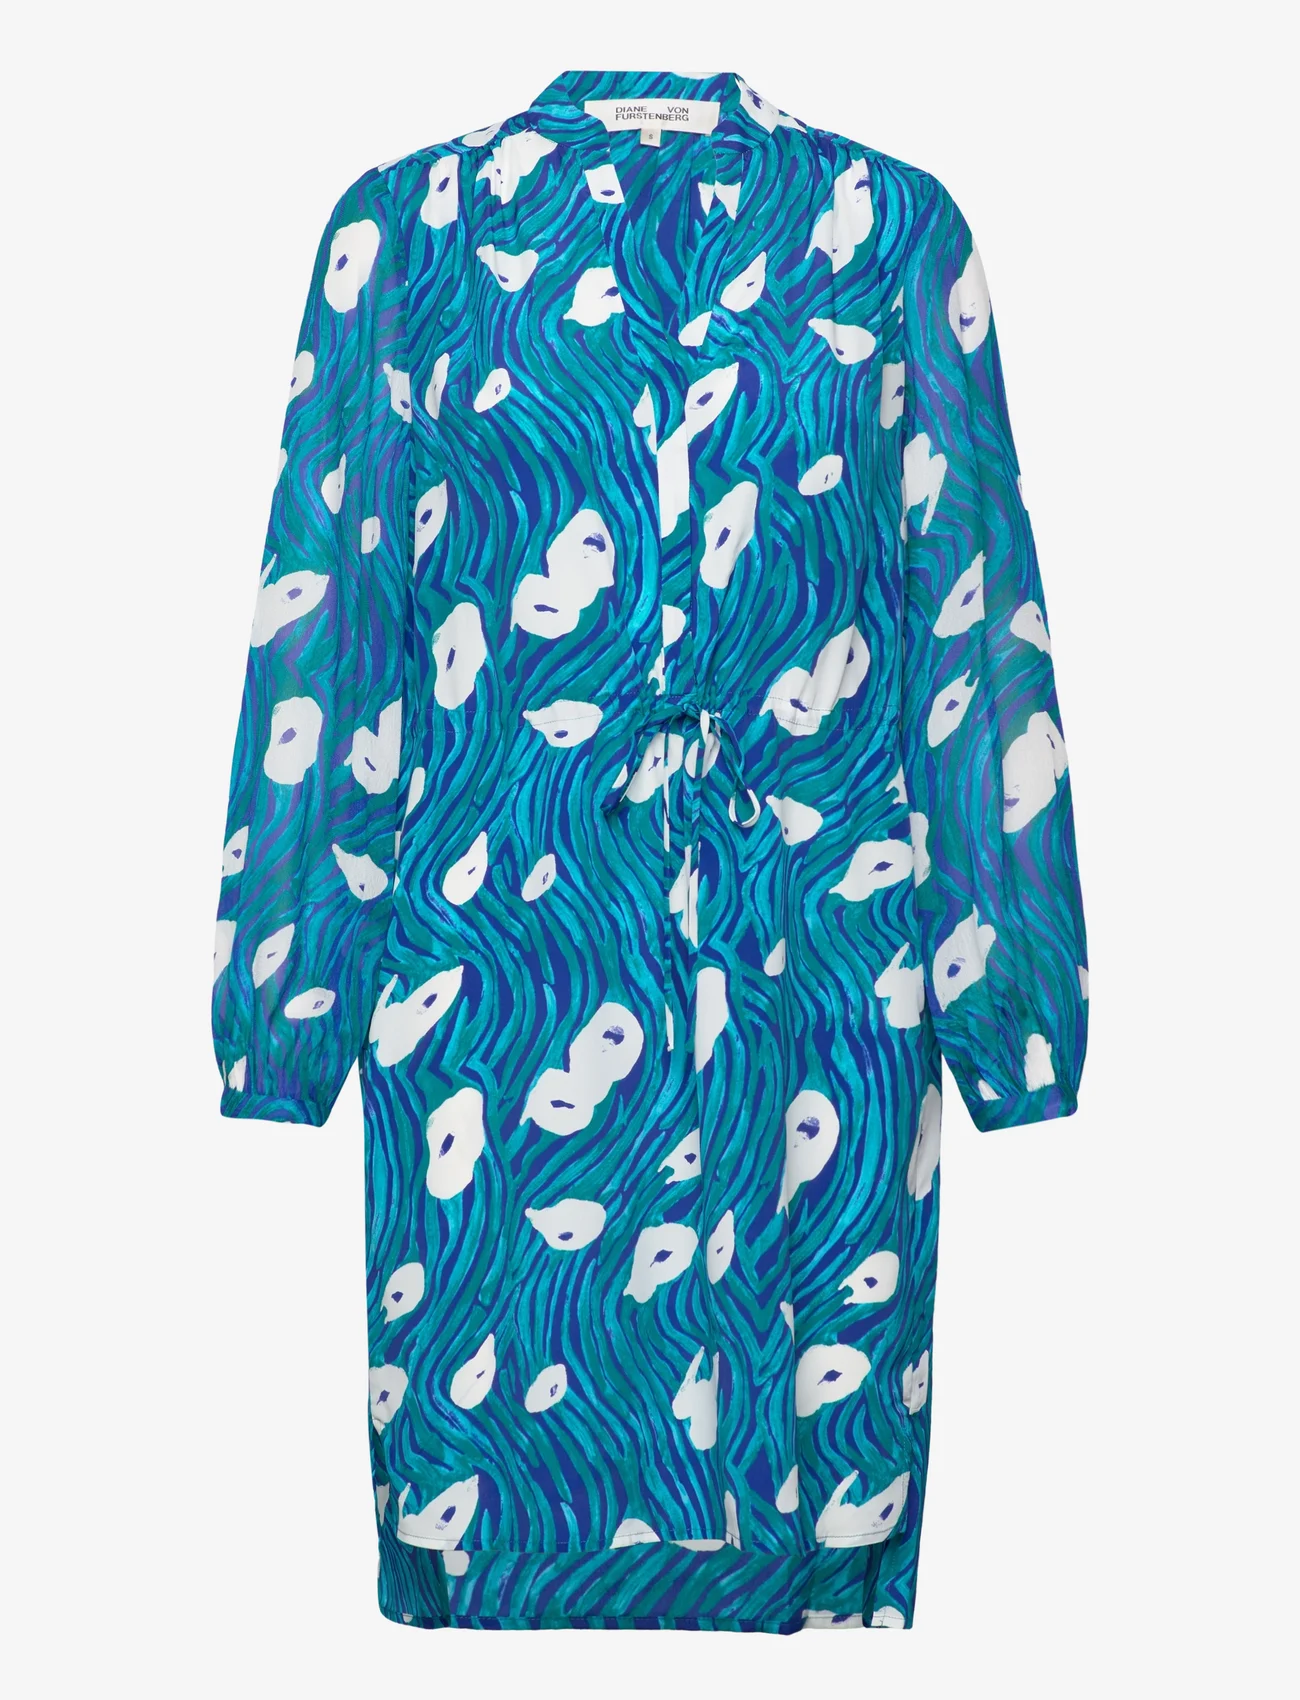 Diane von Furstenberg - DVF SONOYA DRESS - summer dresses - ocean tide quetzal green - 0